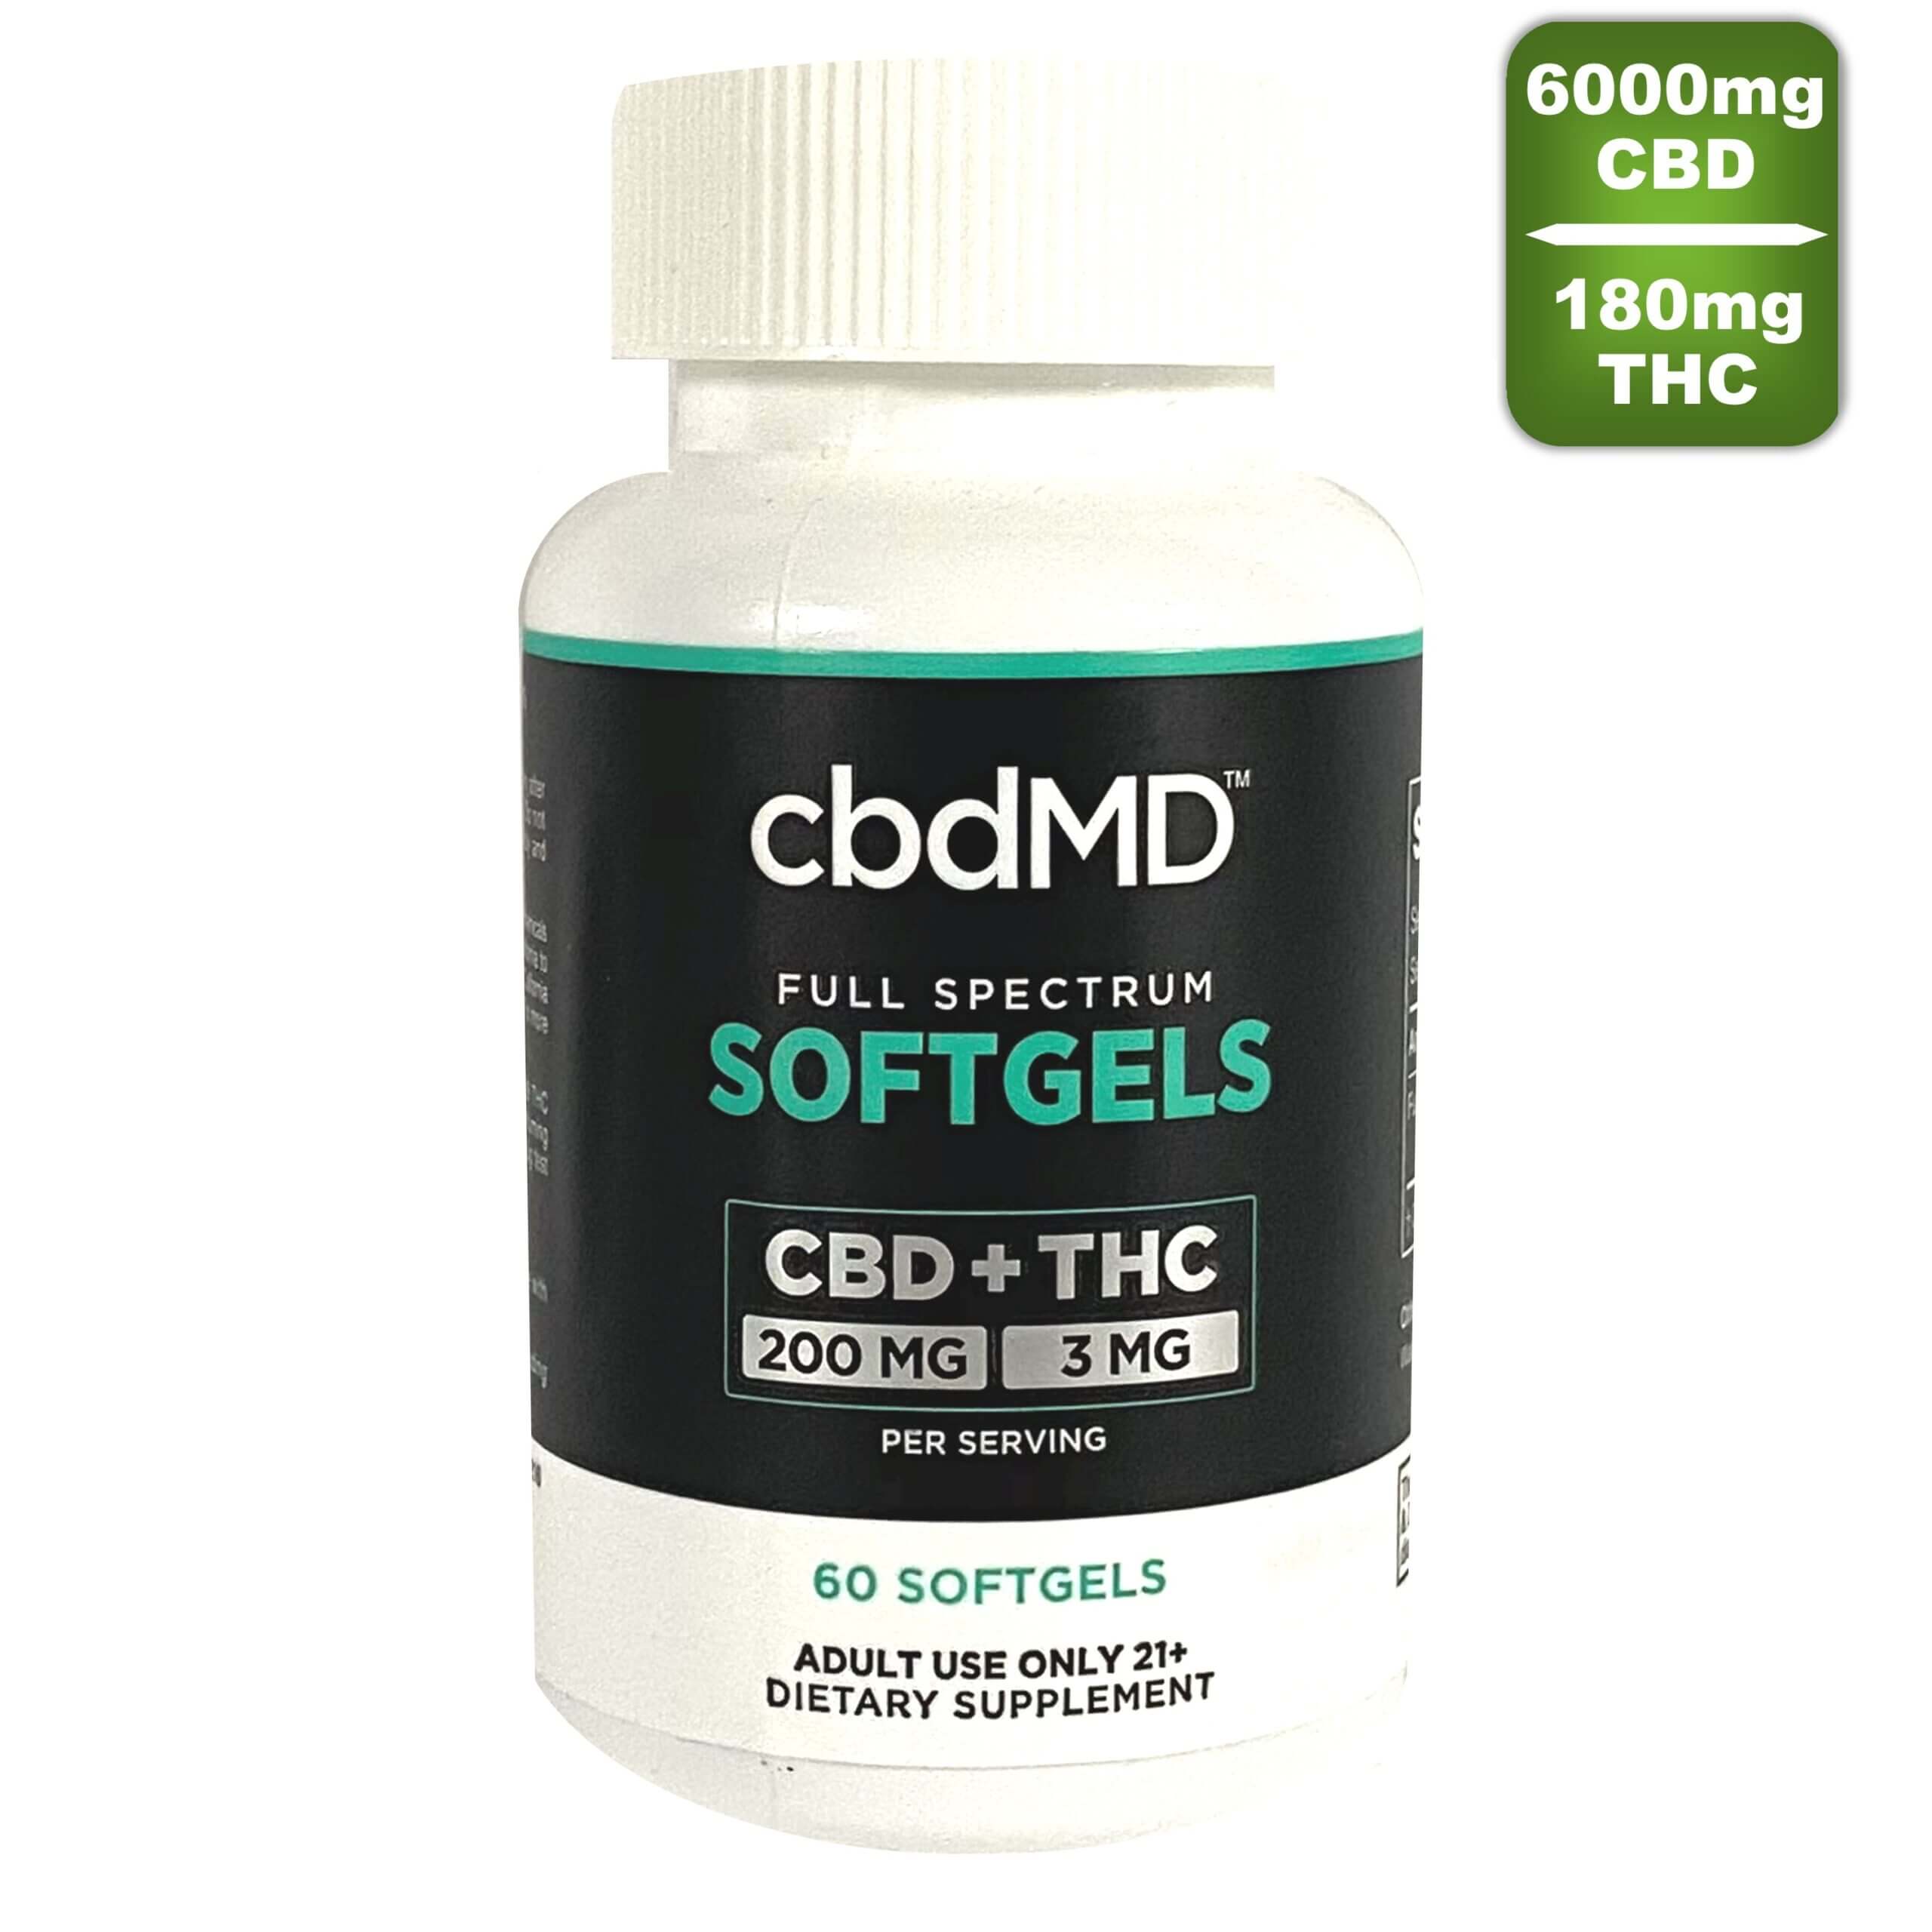 cbdmd - CBD + THC Softgels - 6000mg CBD + 180mg THC - full spectrum - 60 count